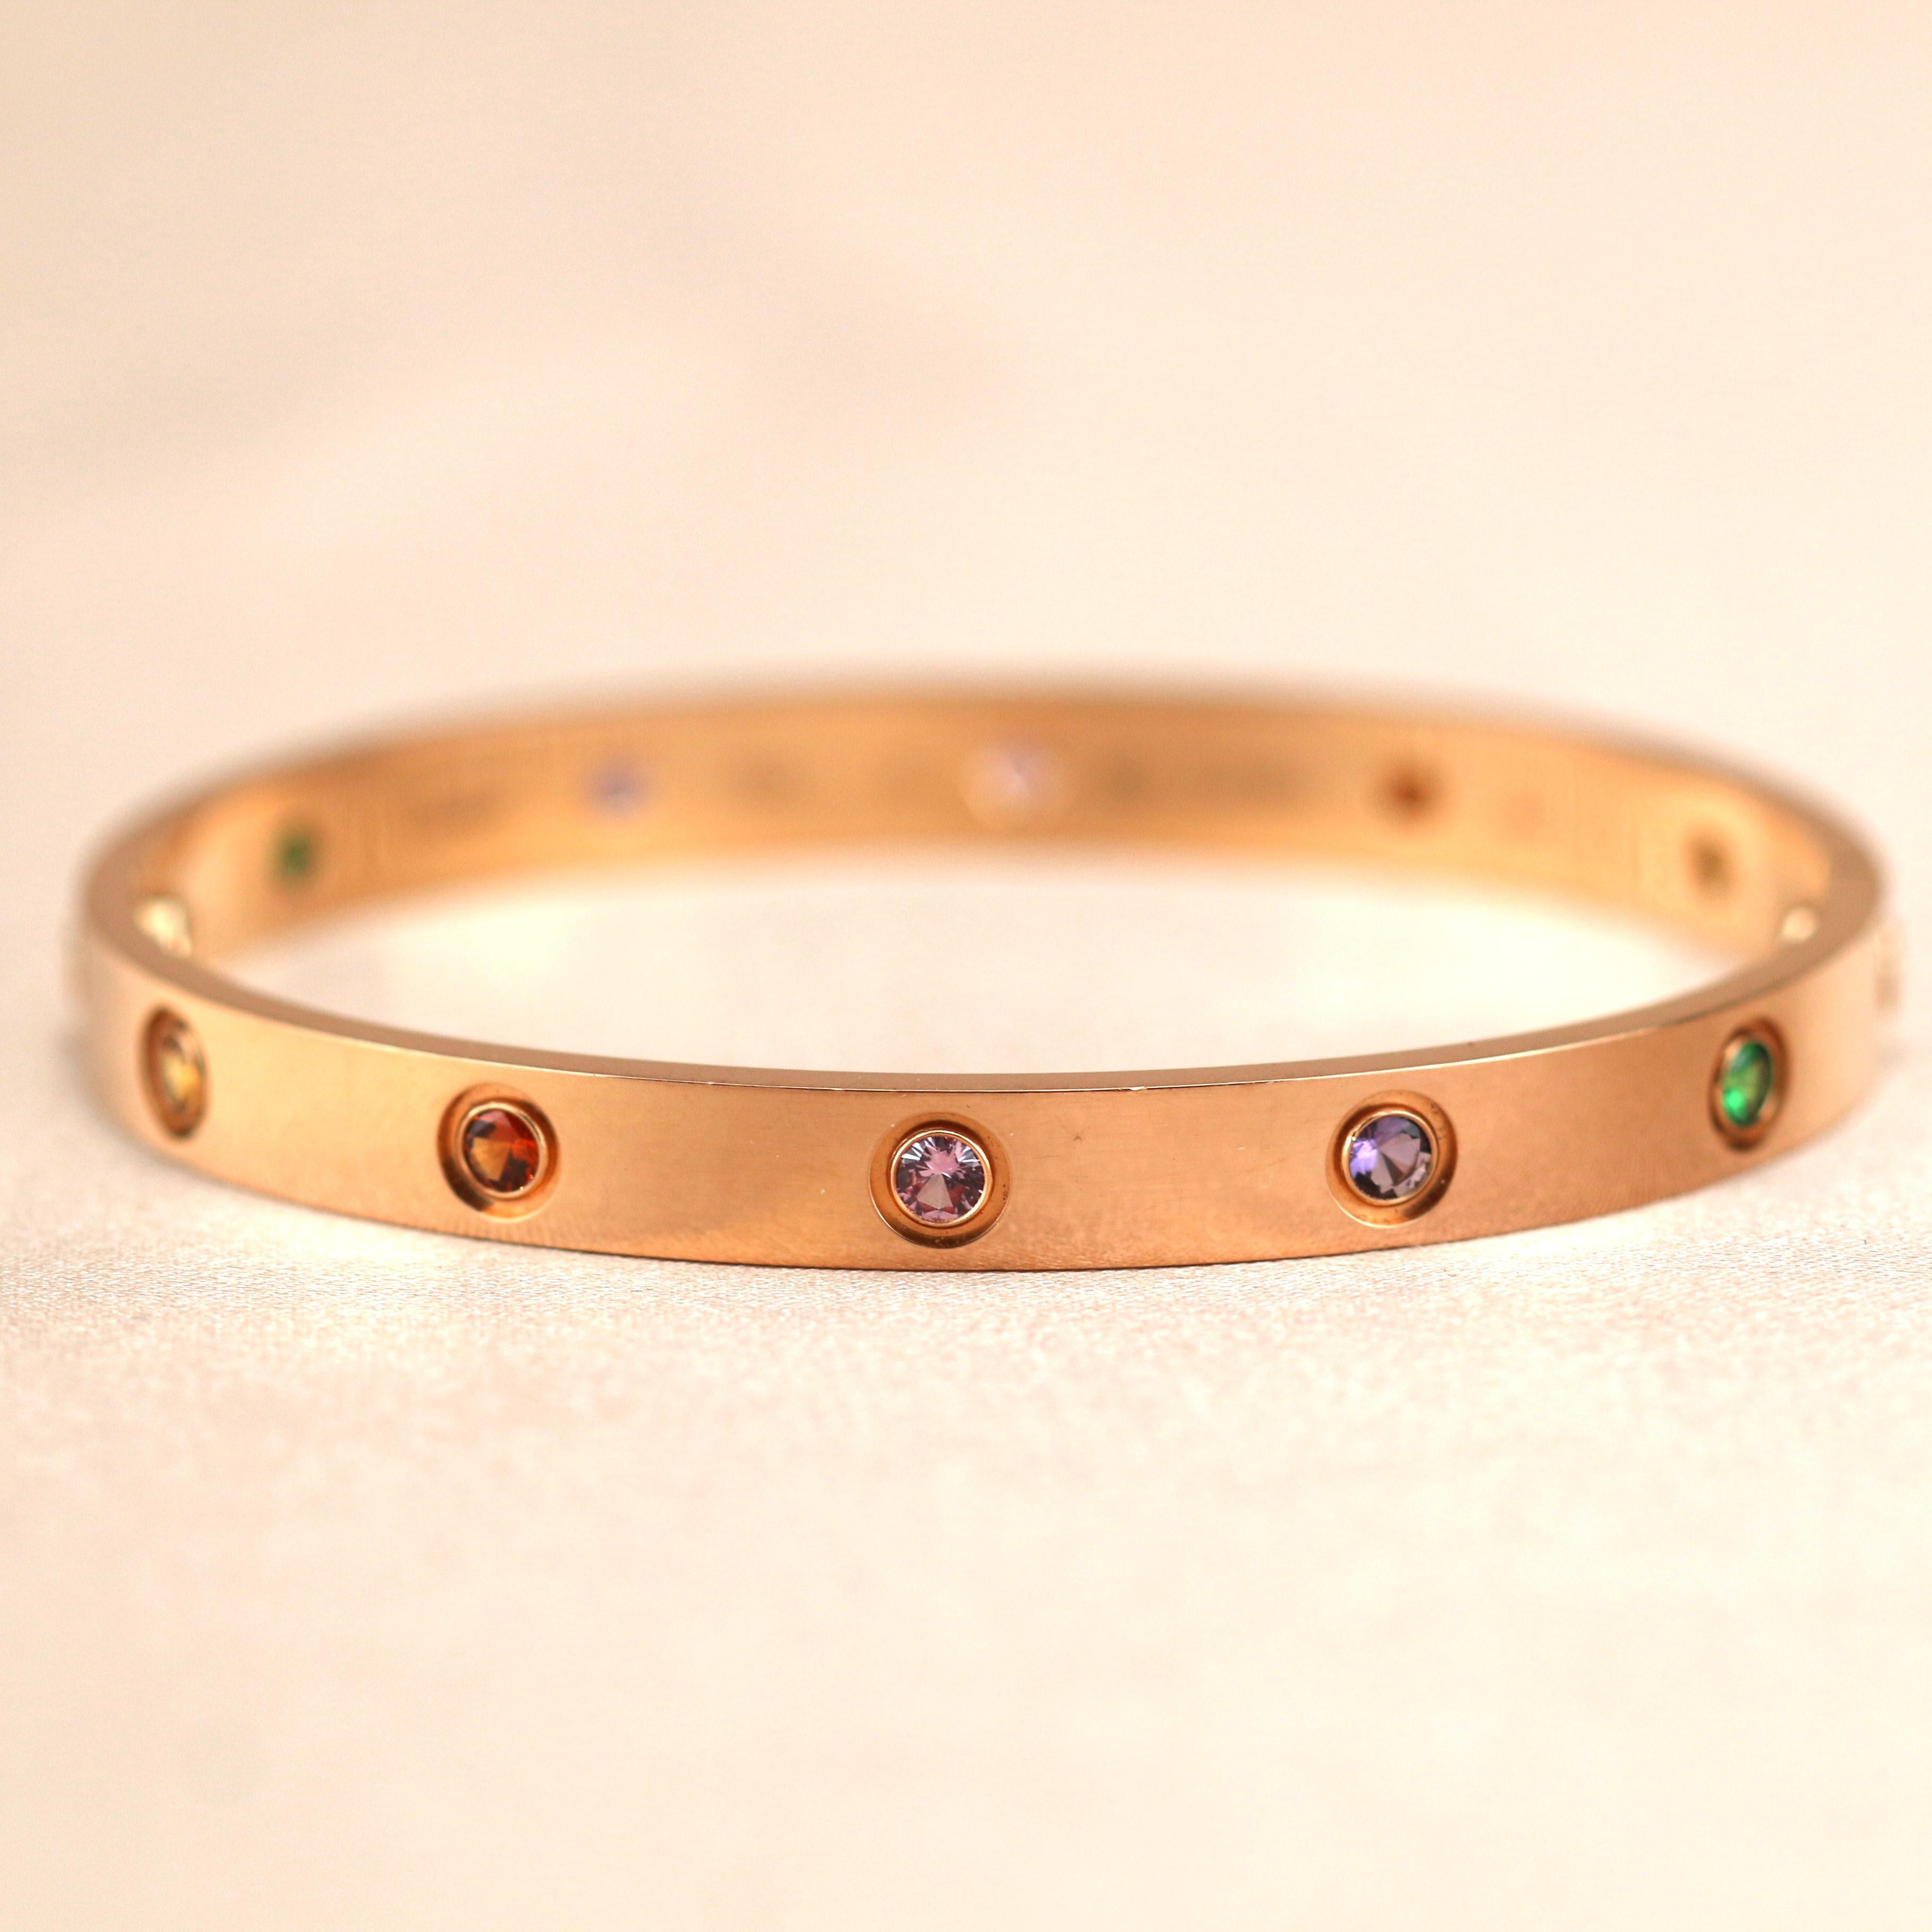 LOVE bracelet, 18K rose gold, set with 2 pink sapphires, 2 yellow sapphires, 2 green garnets, 2 orange garnets, and 2 amethysts. 
_____________________________________________________________
Dandelion Antiques Code AT-1199
Brand Cartier
Model